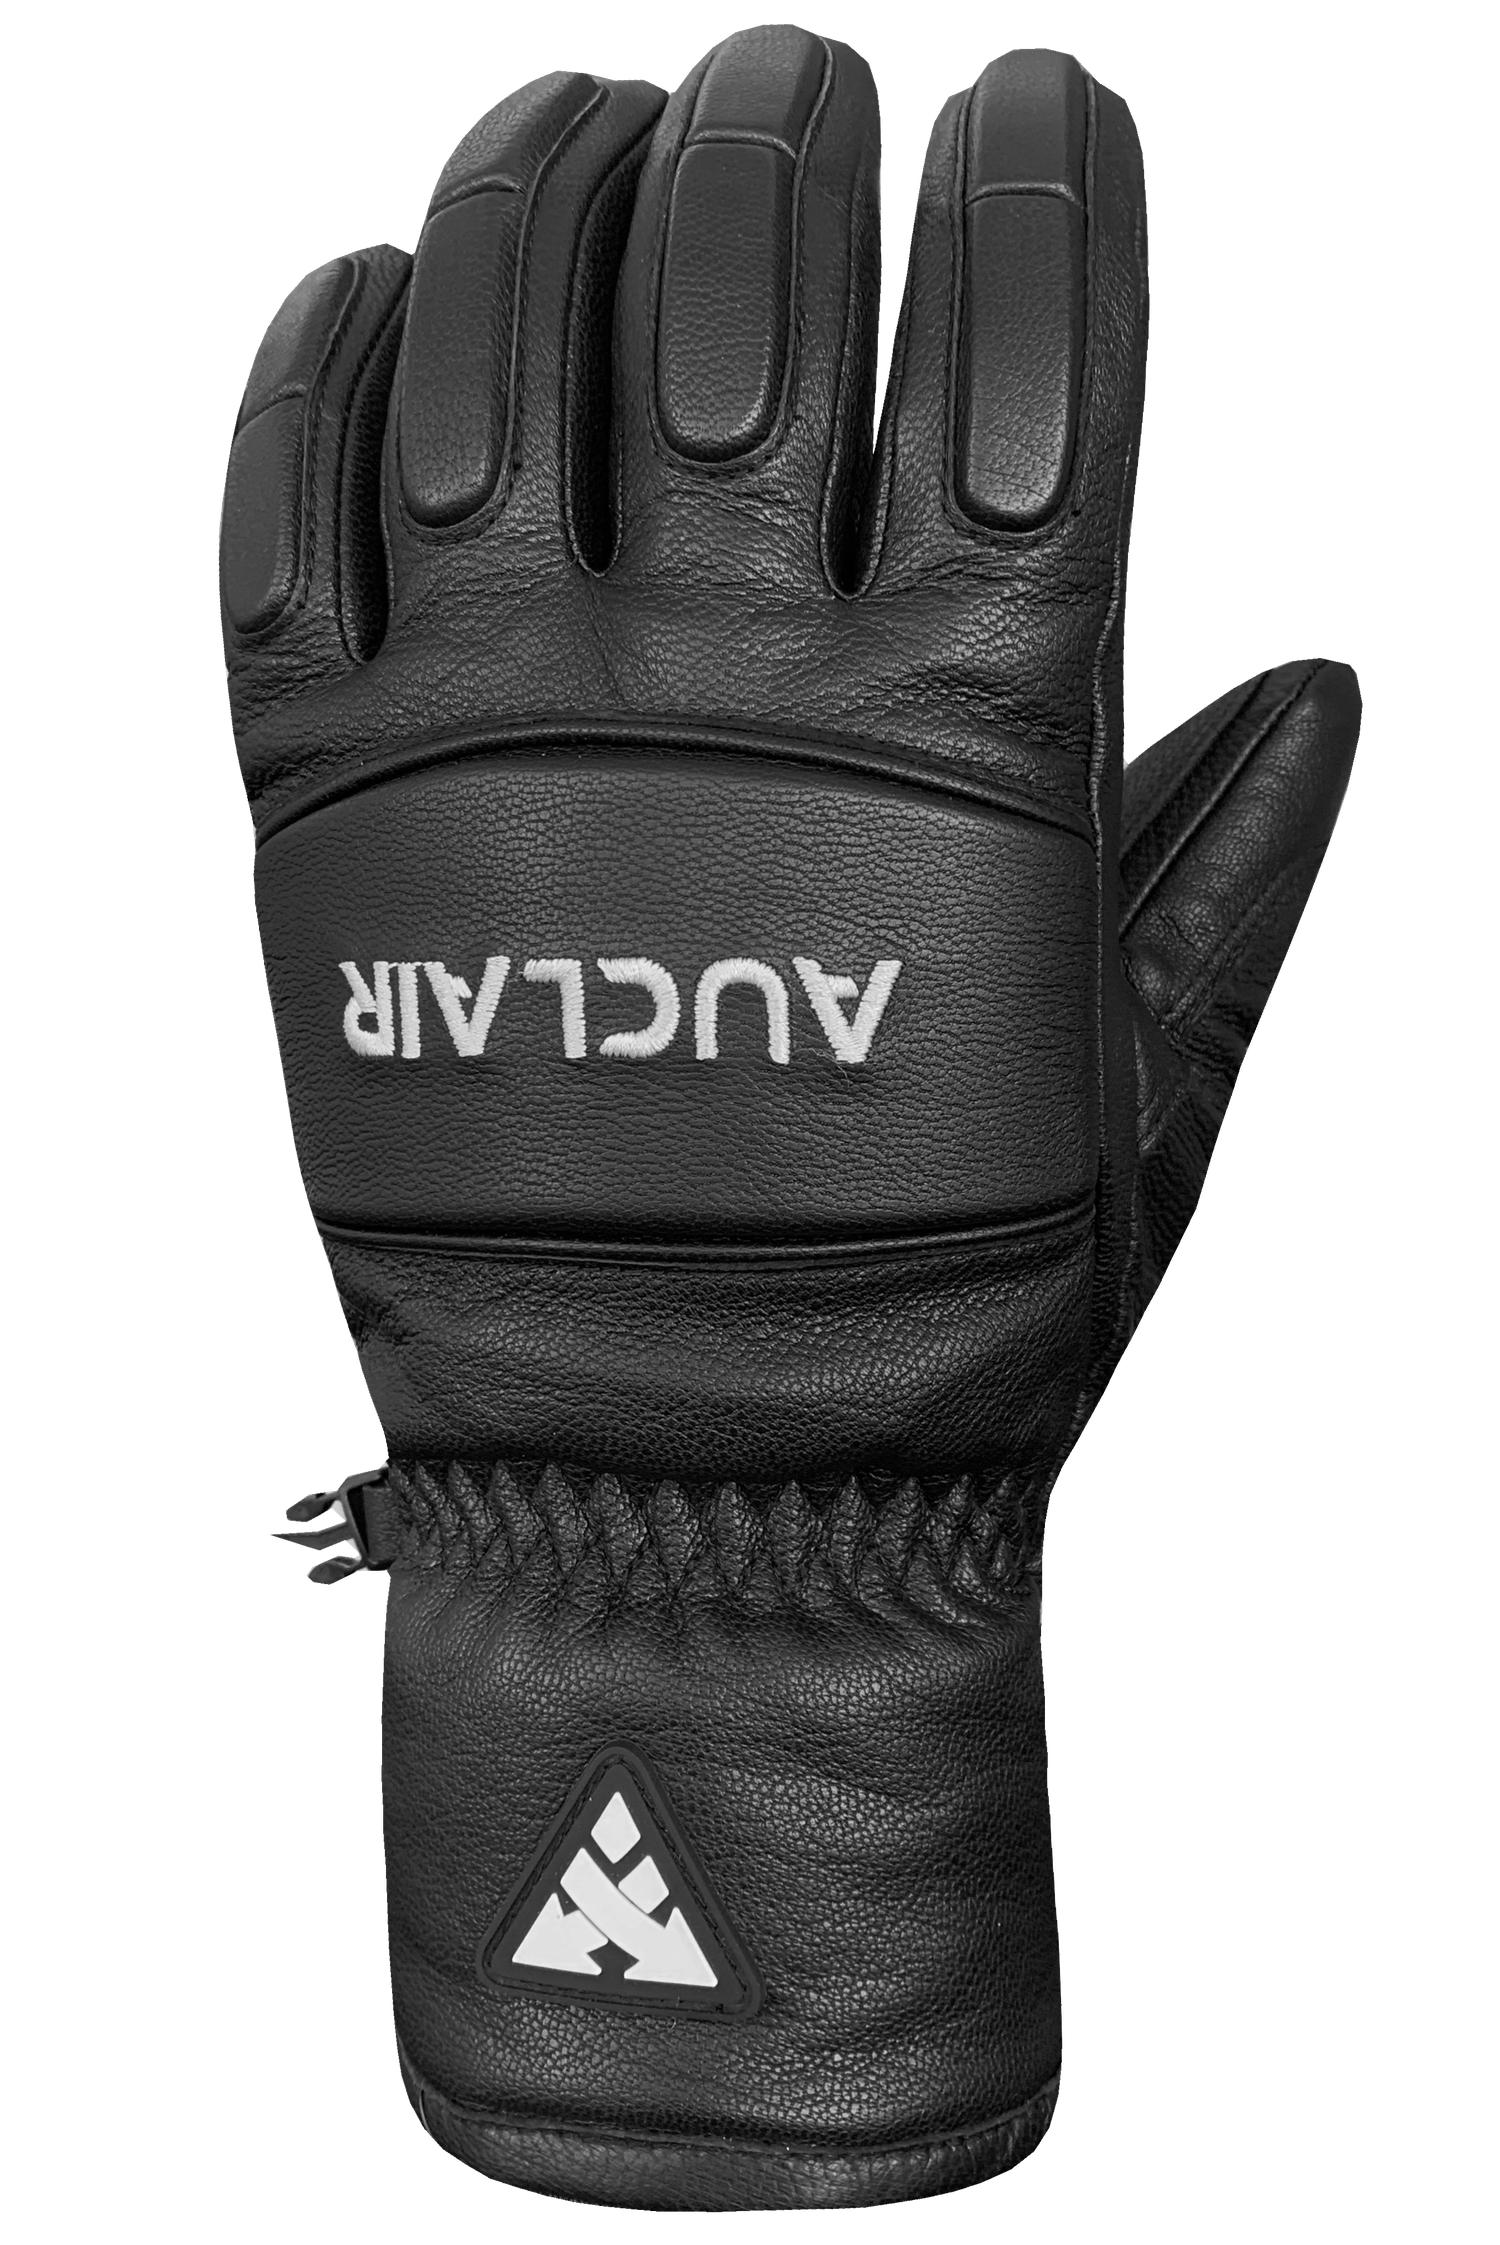 Son of T 4 Gloves - Junior, Black/Black